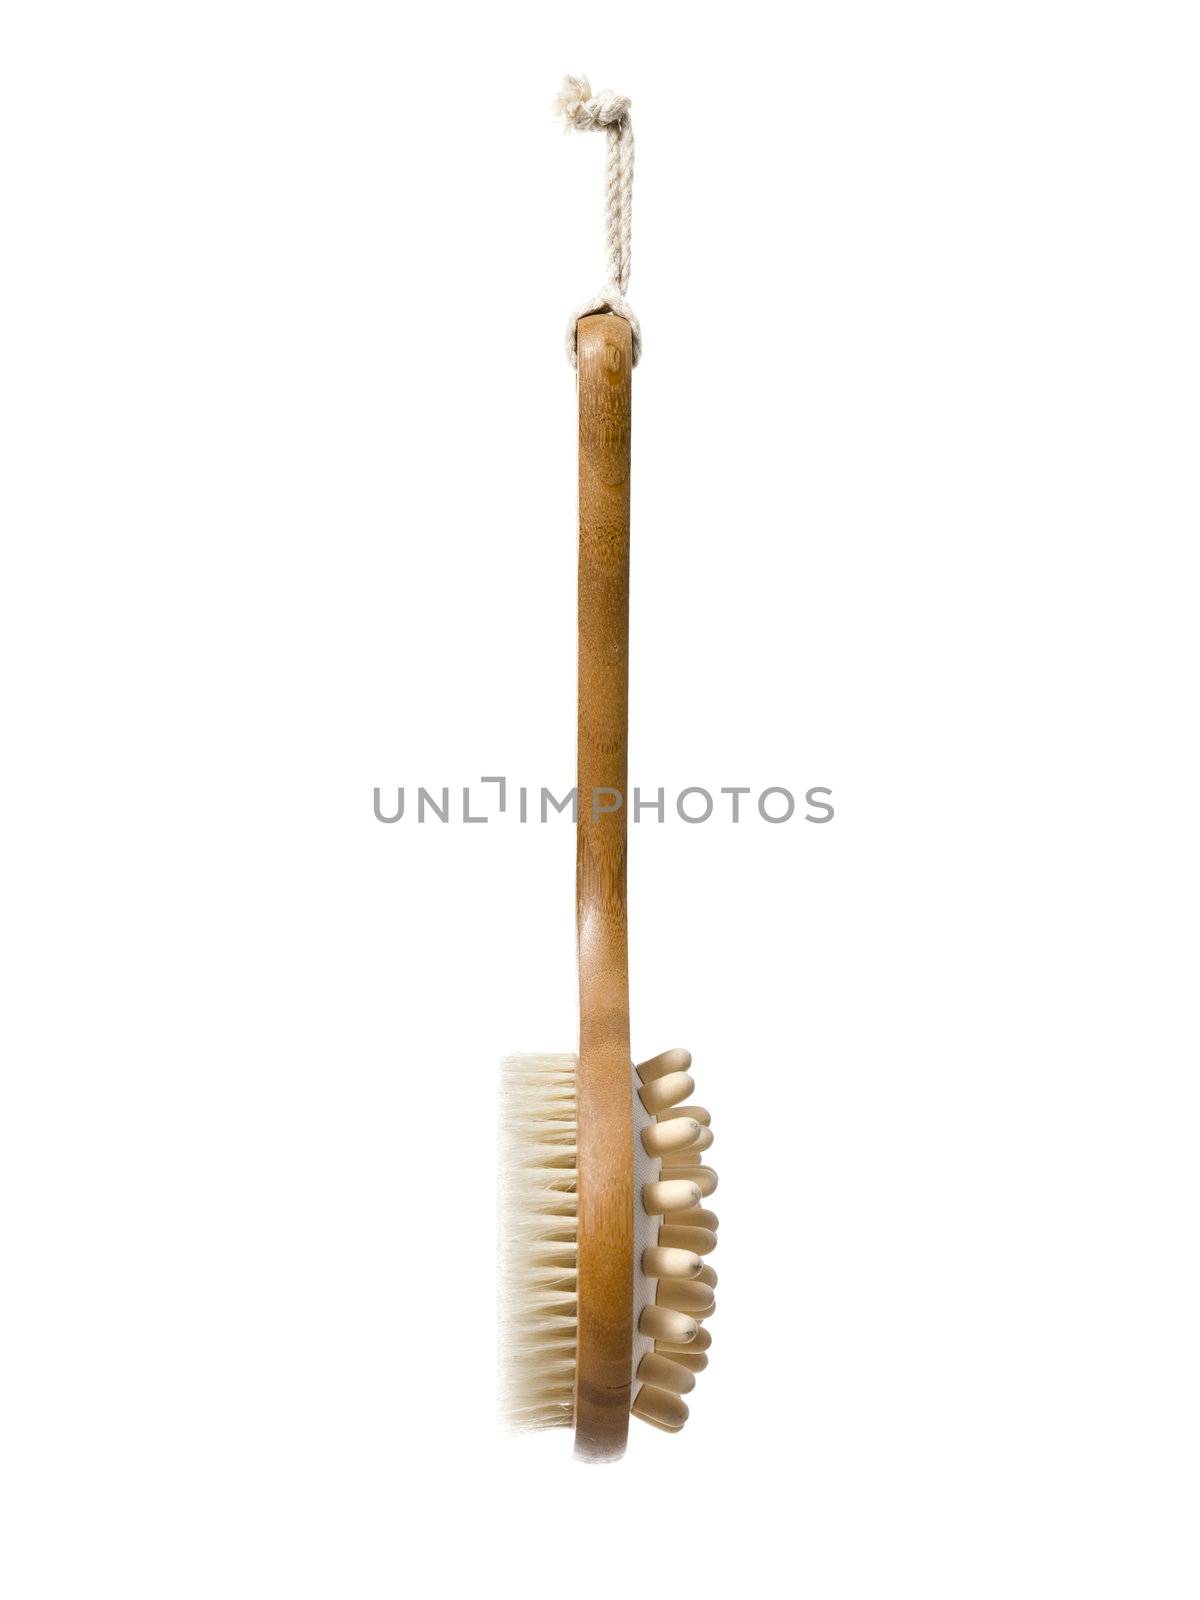 Wooden Bath Massage Scrub Brush in a vertical image